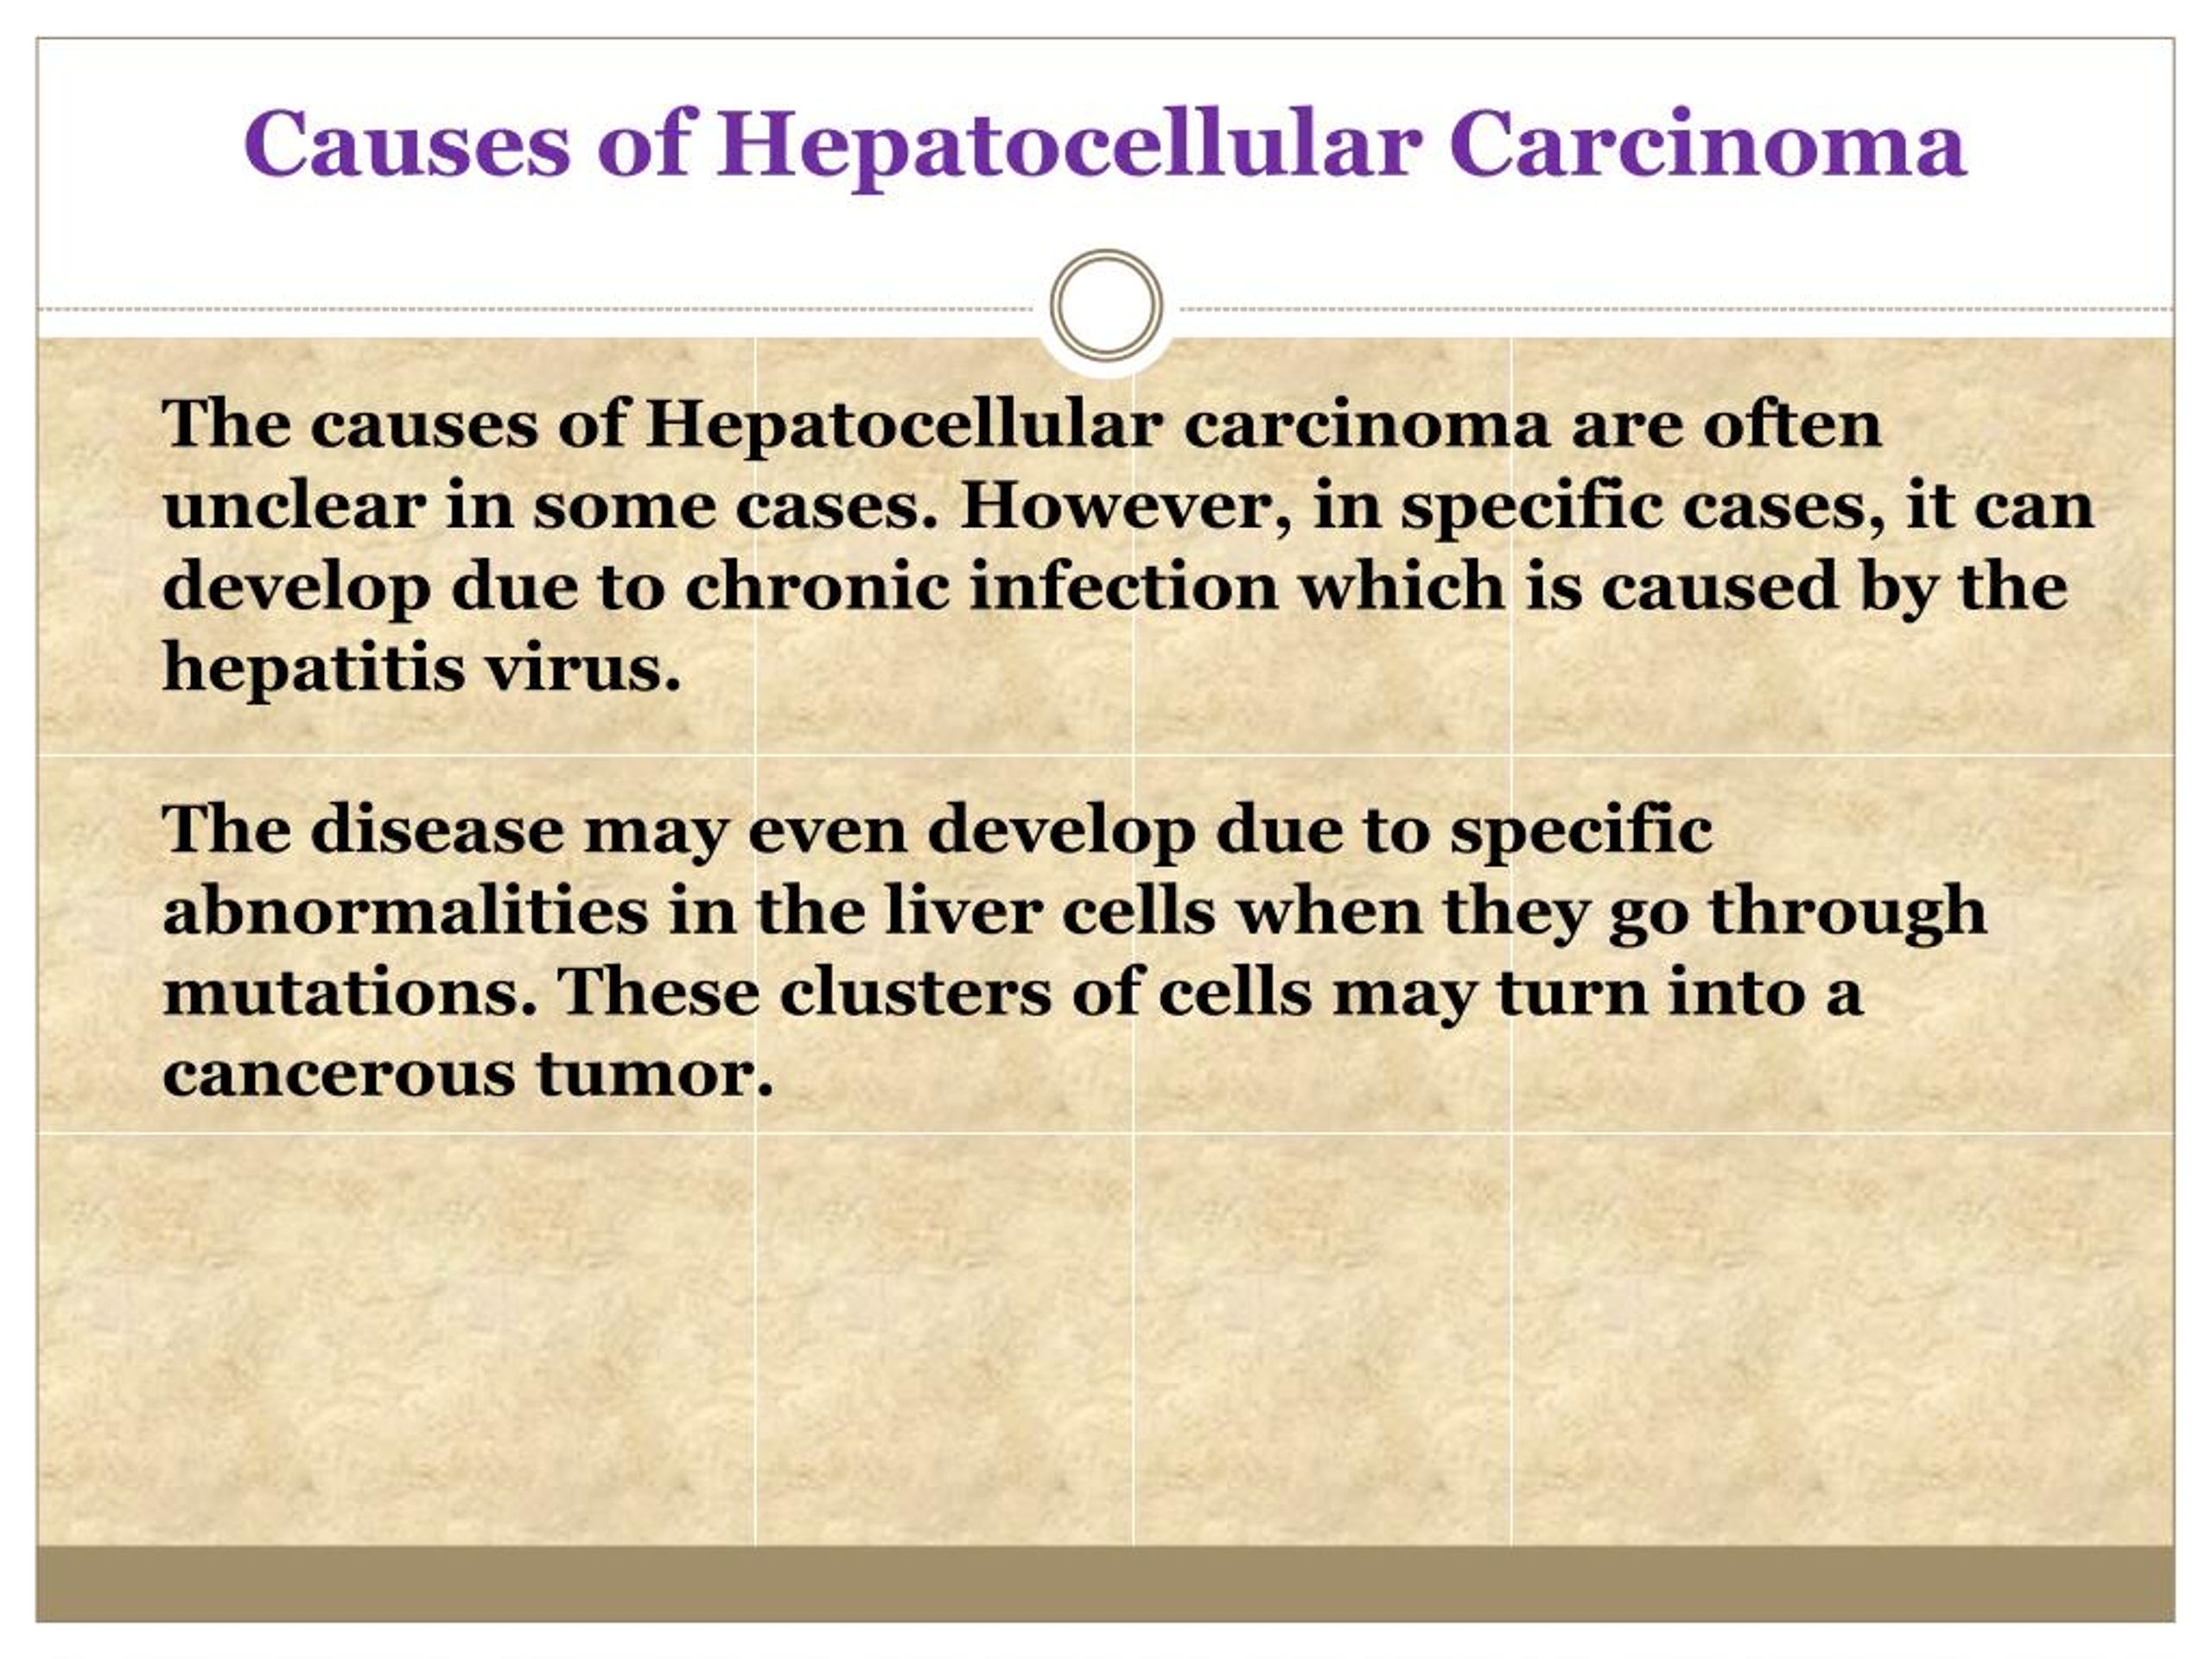 PPT - Hepatocellular Carcinoma: Causes, Symptoms, Daignosis, Prevention ...